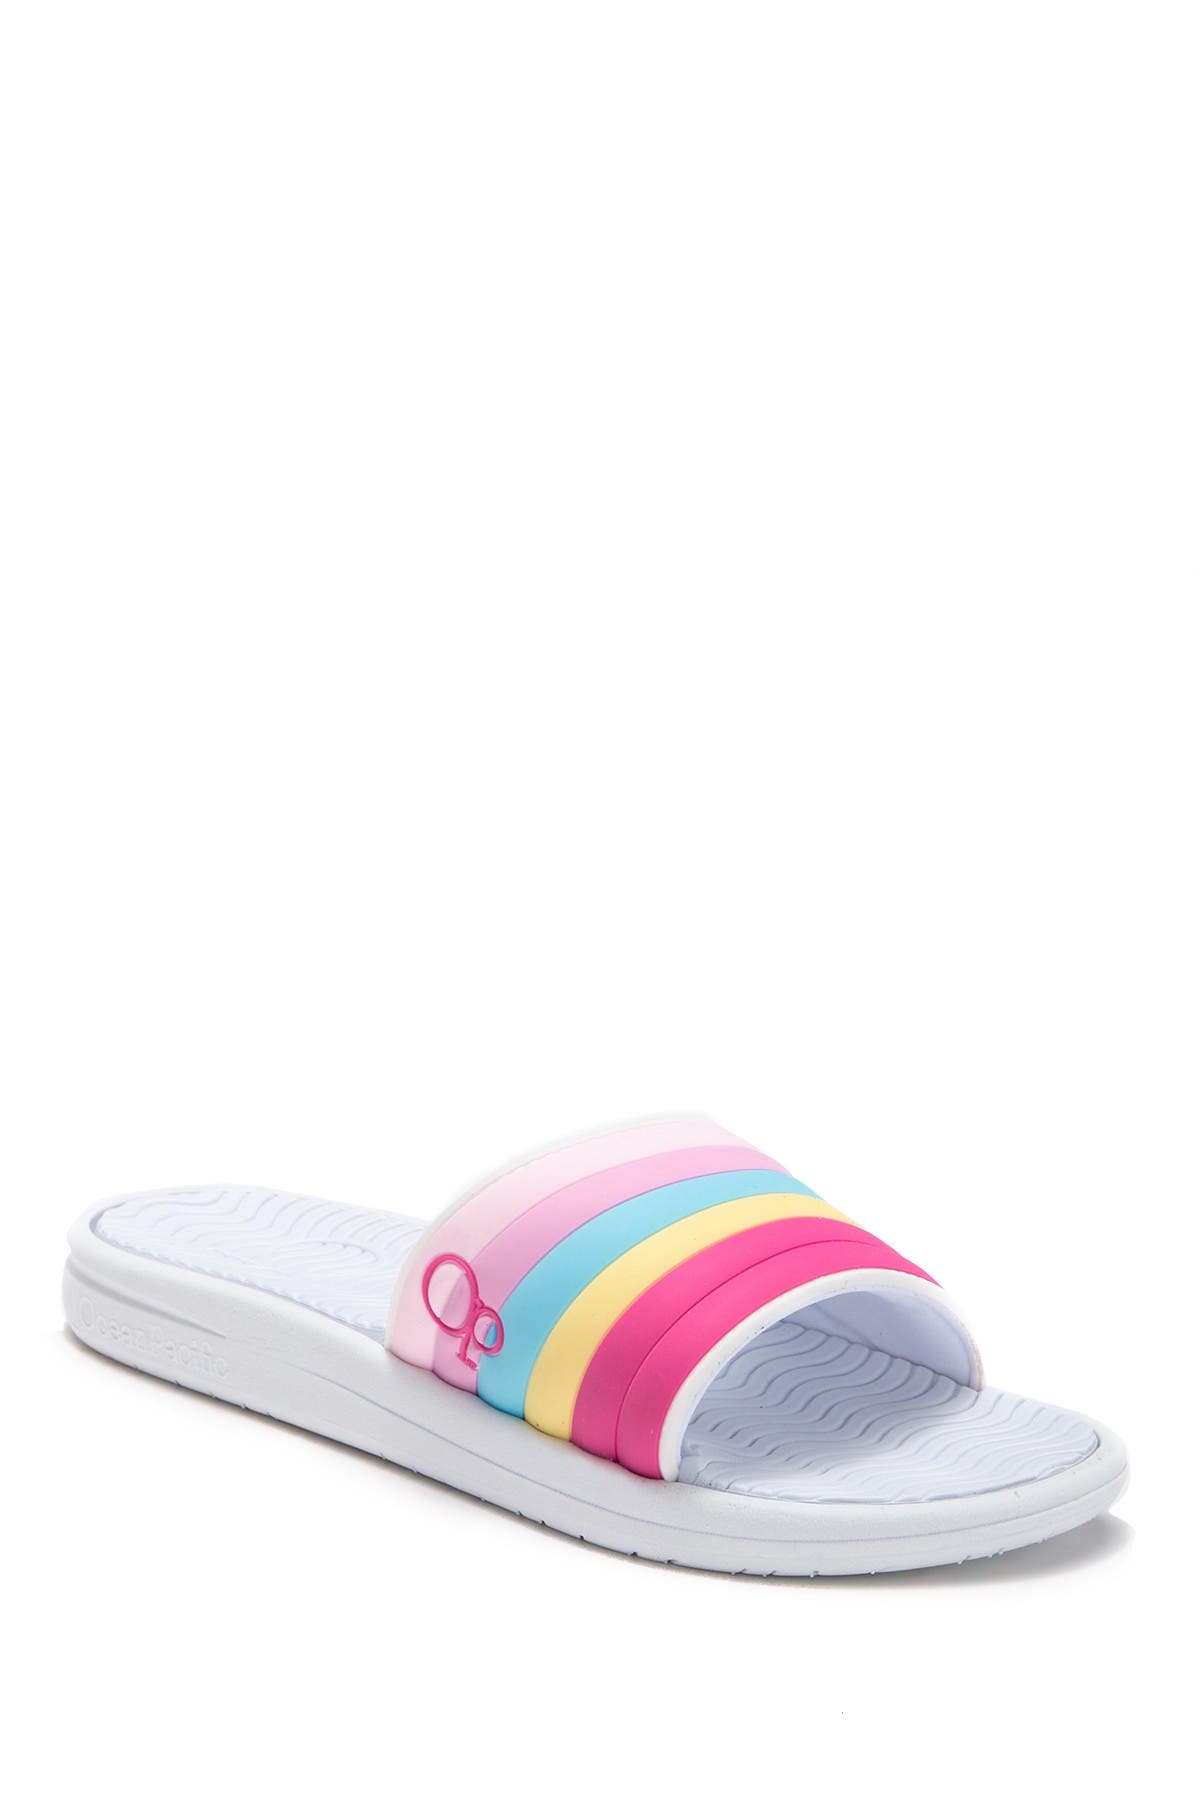 nordstrom rainbow sandals